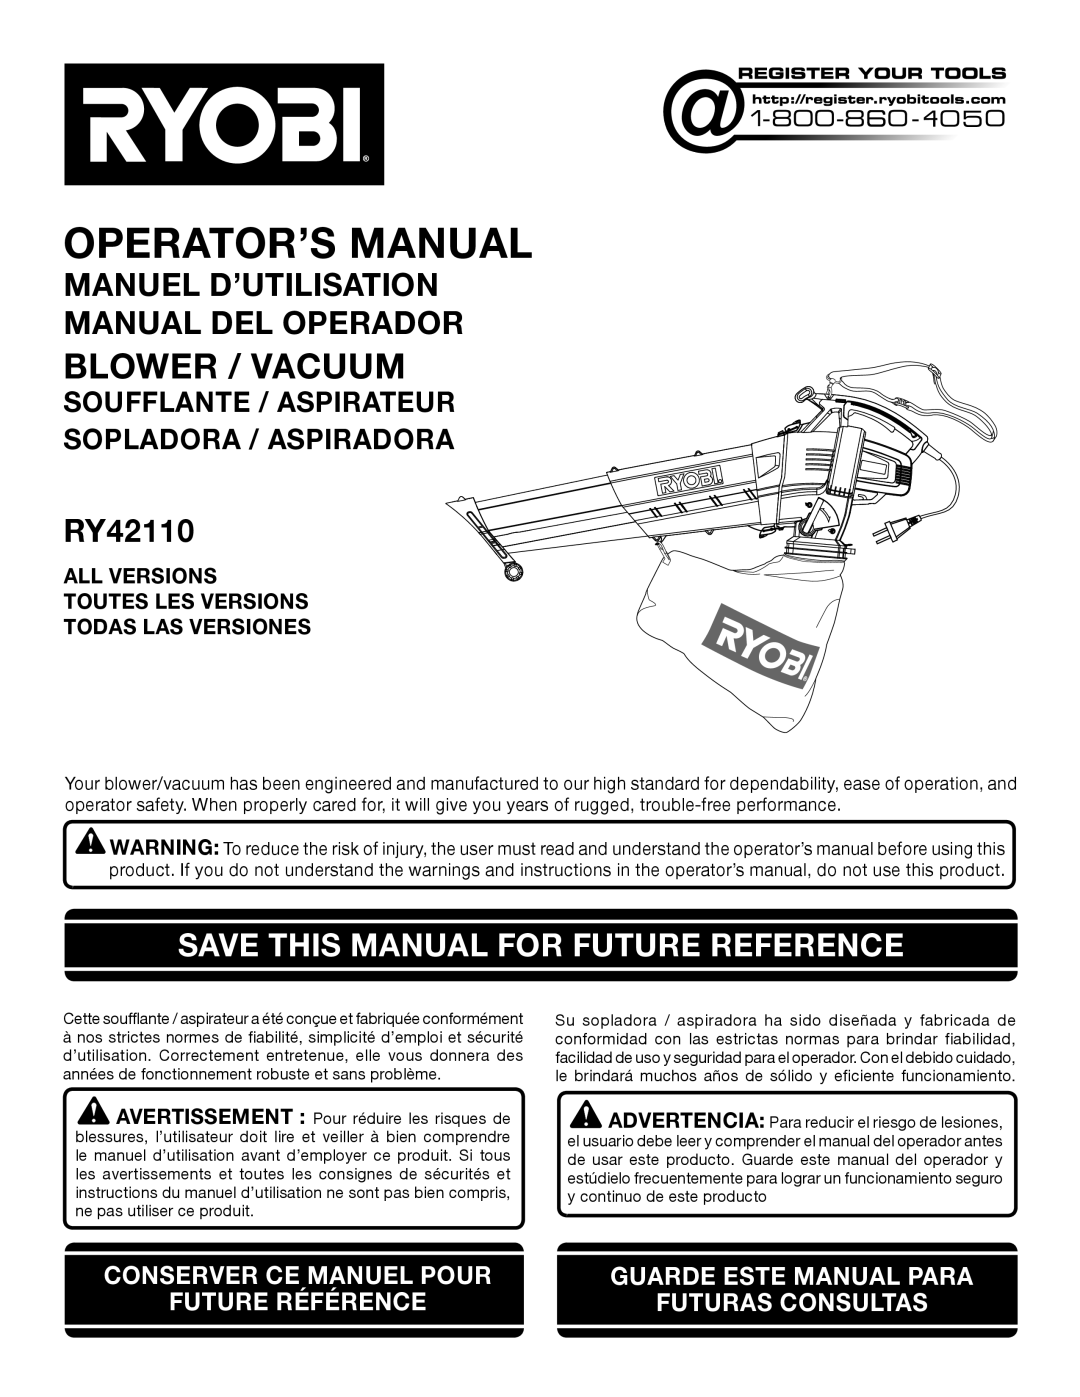 Ryobi RY42110 manuel dutilisation Blower / Vacuum, Manuel D’Utilisation Manual Del Operador, Operator’S Manual 